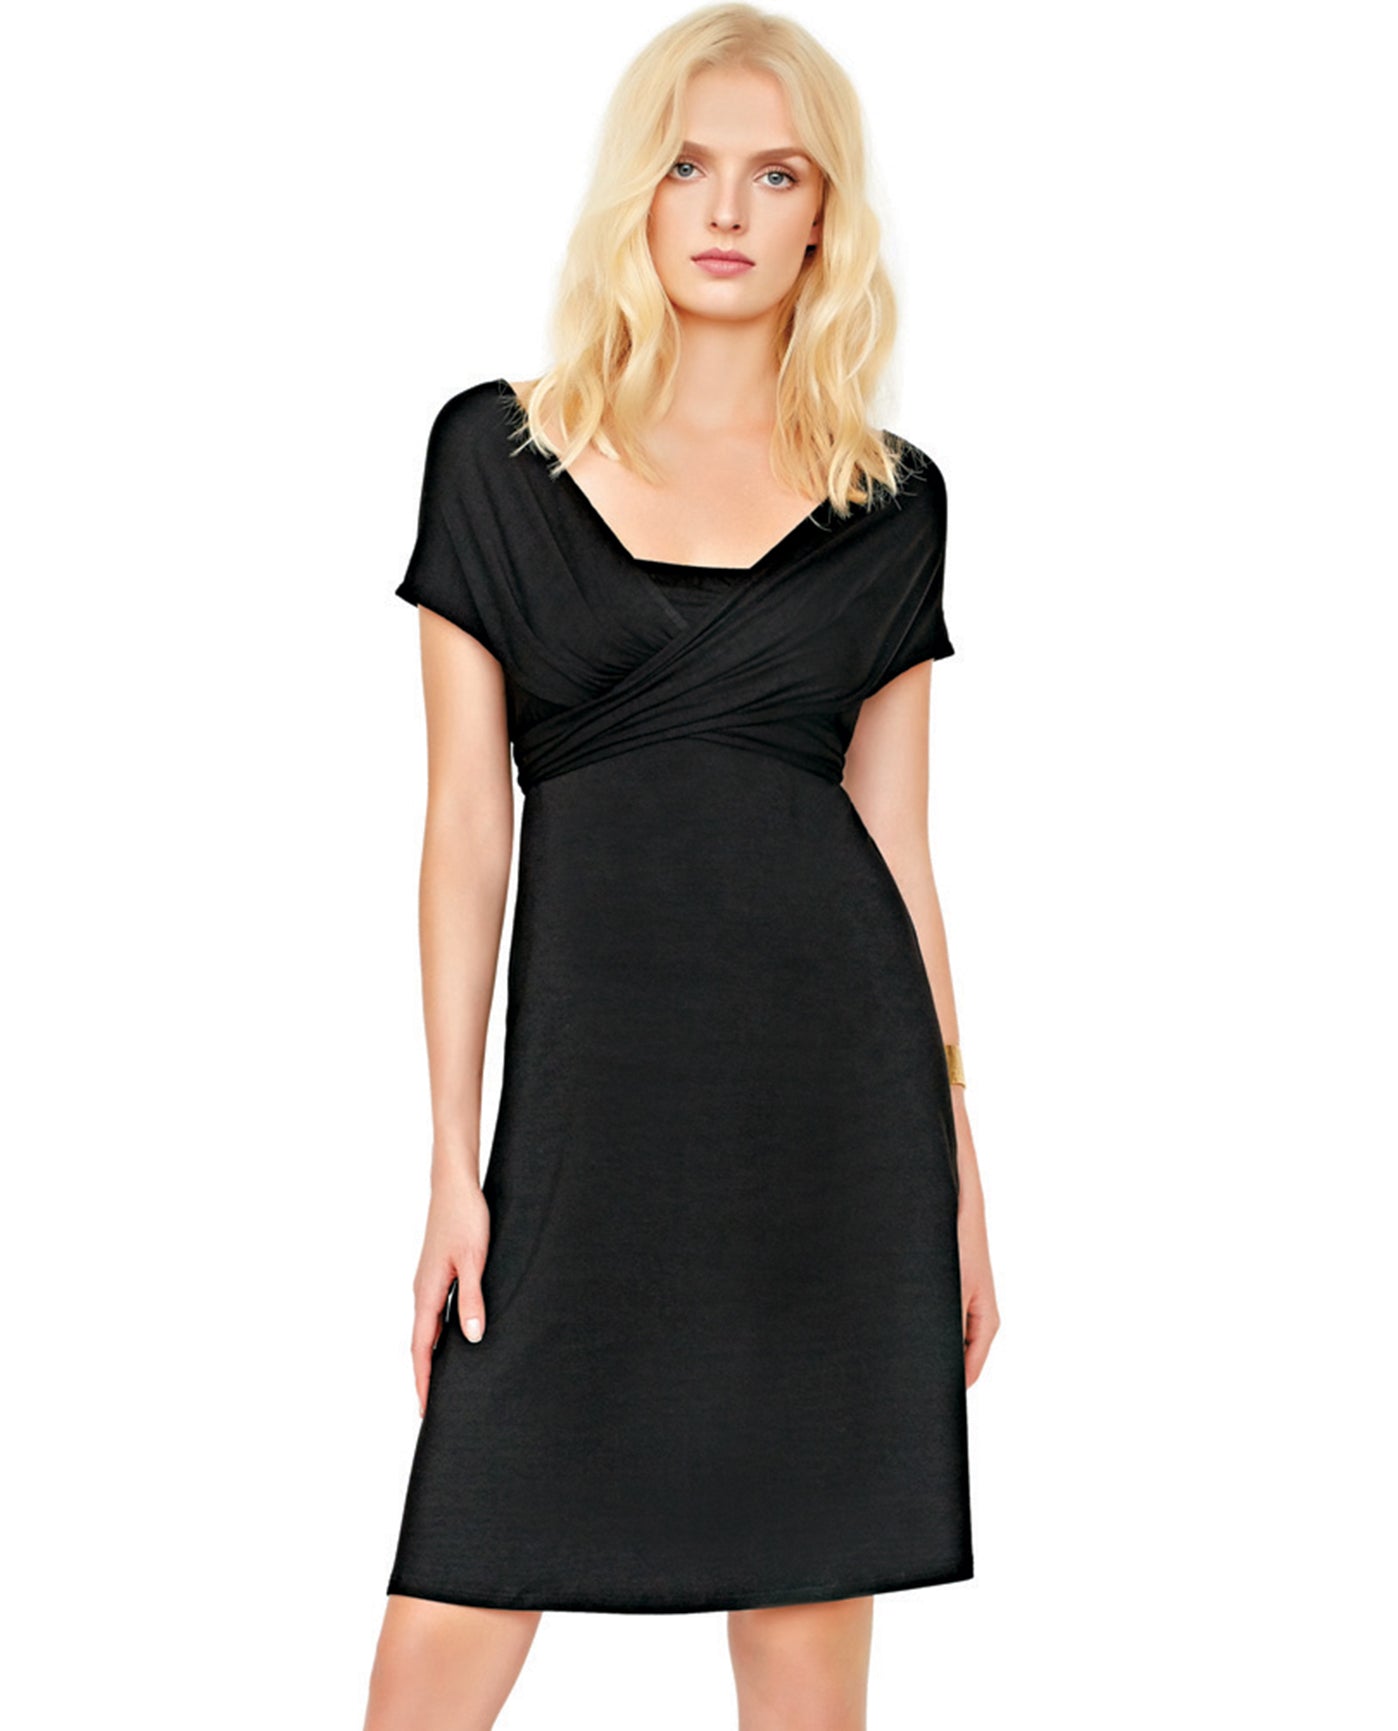 Front View Of 5-in-1 Gottex Lattice Black Beach Dress | GOT Lattice Black